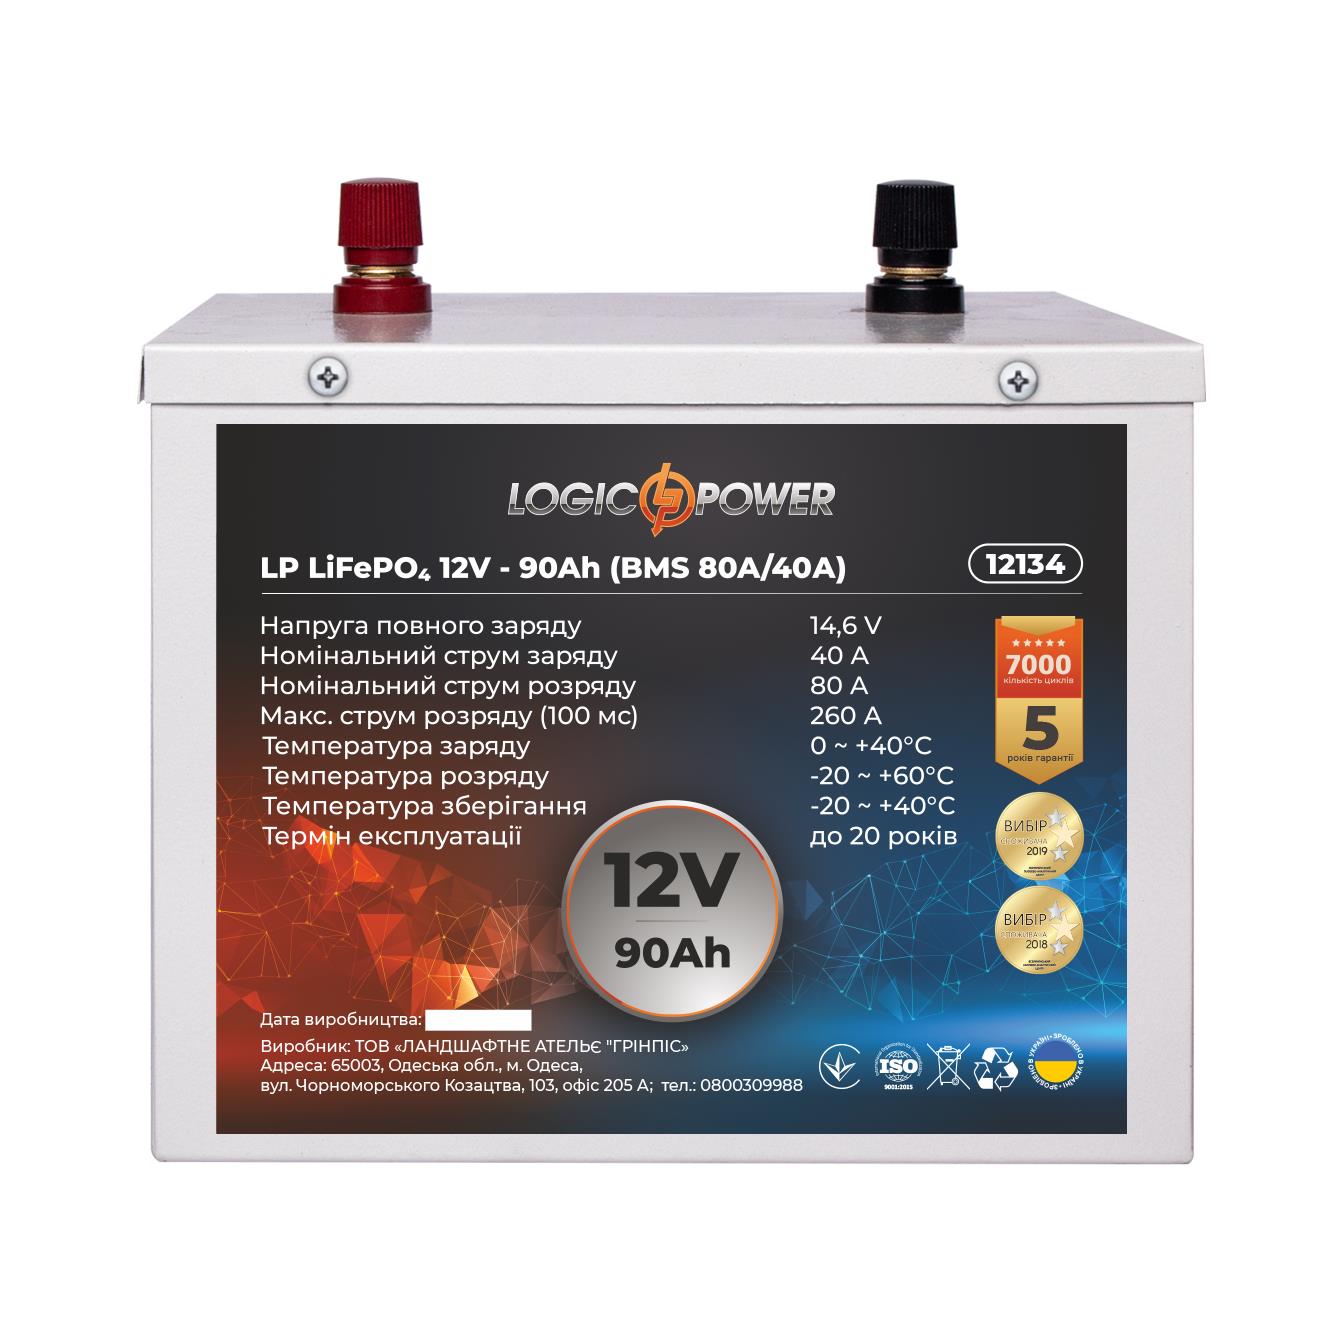 Акумулятор літій-залізо-фосфатний LogicPower LP LiFePO4 12V - 90 Ah (BMS 80A/40A) метал (12134)